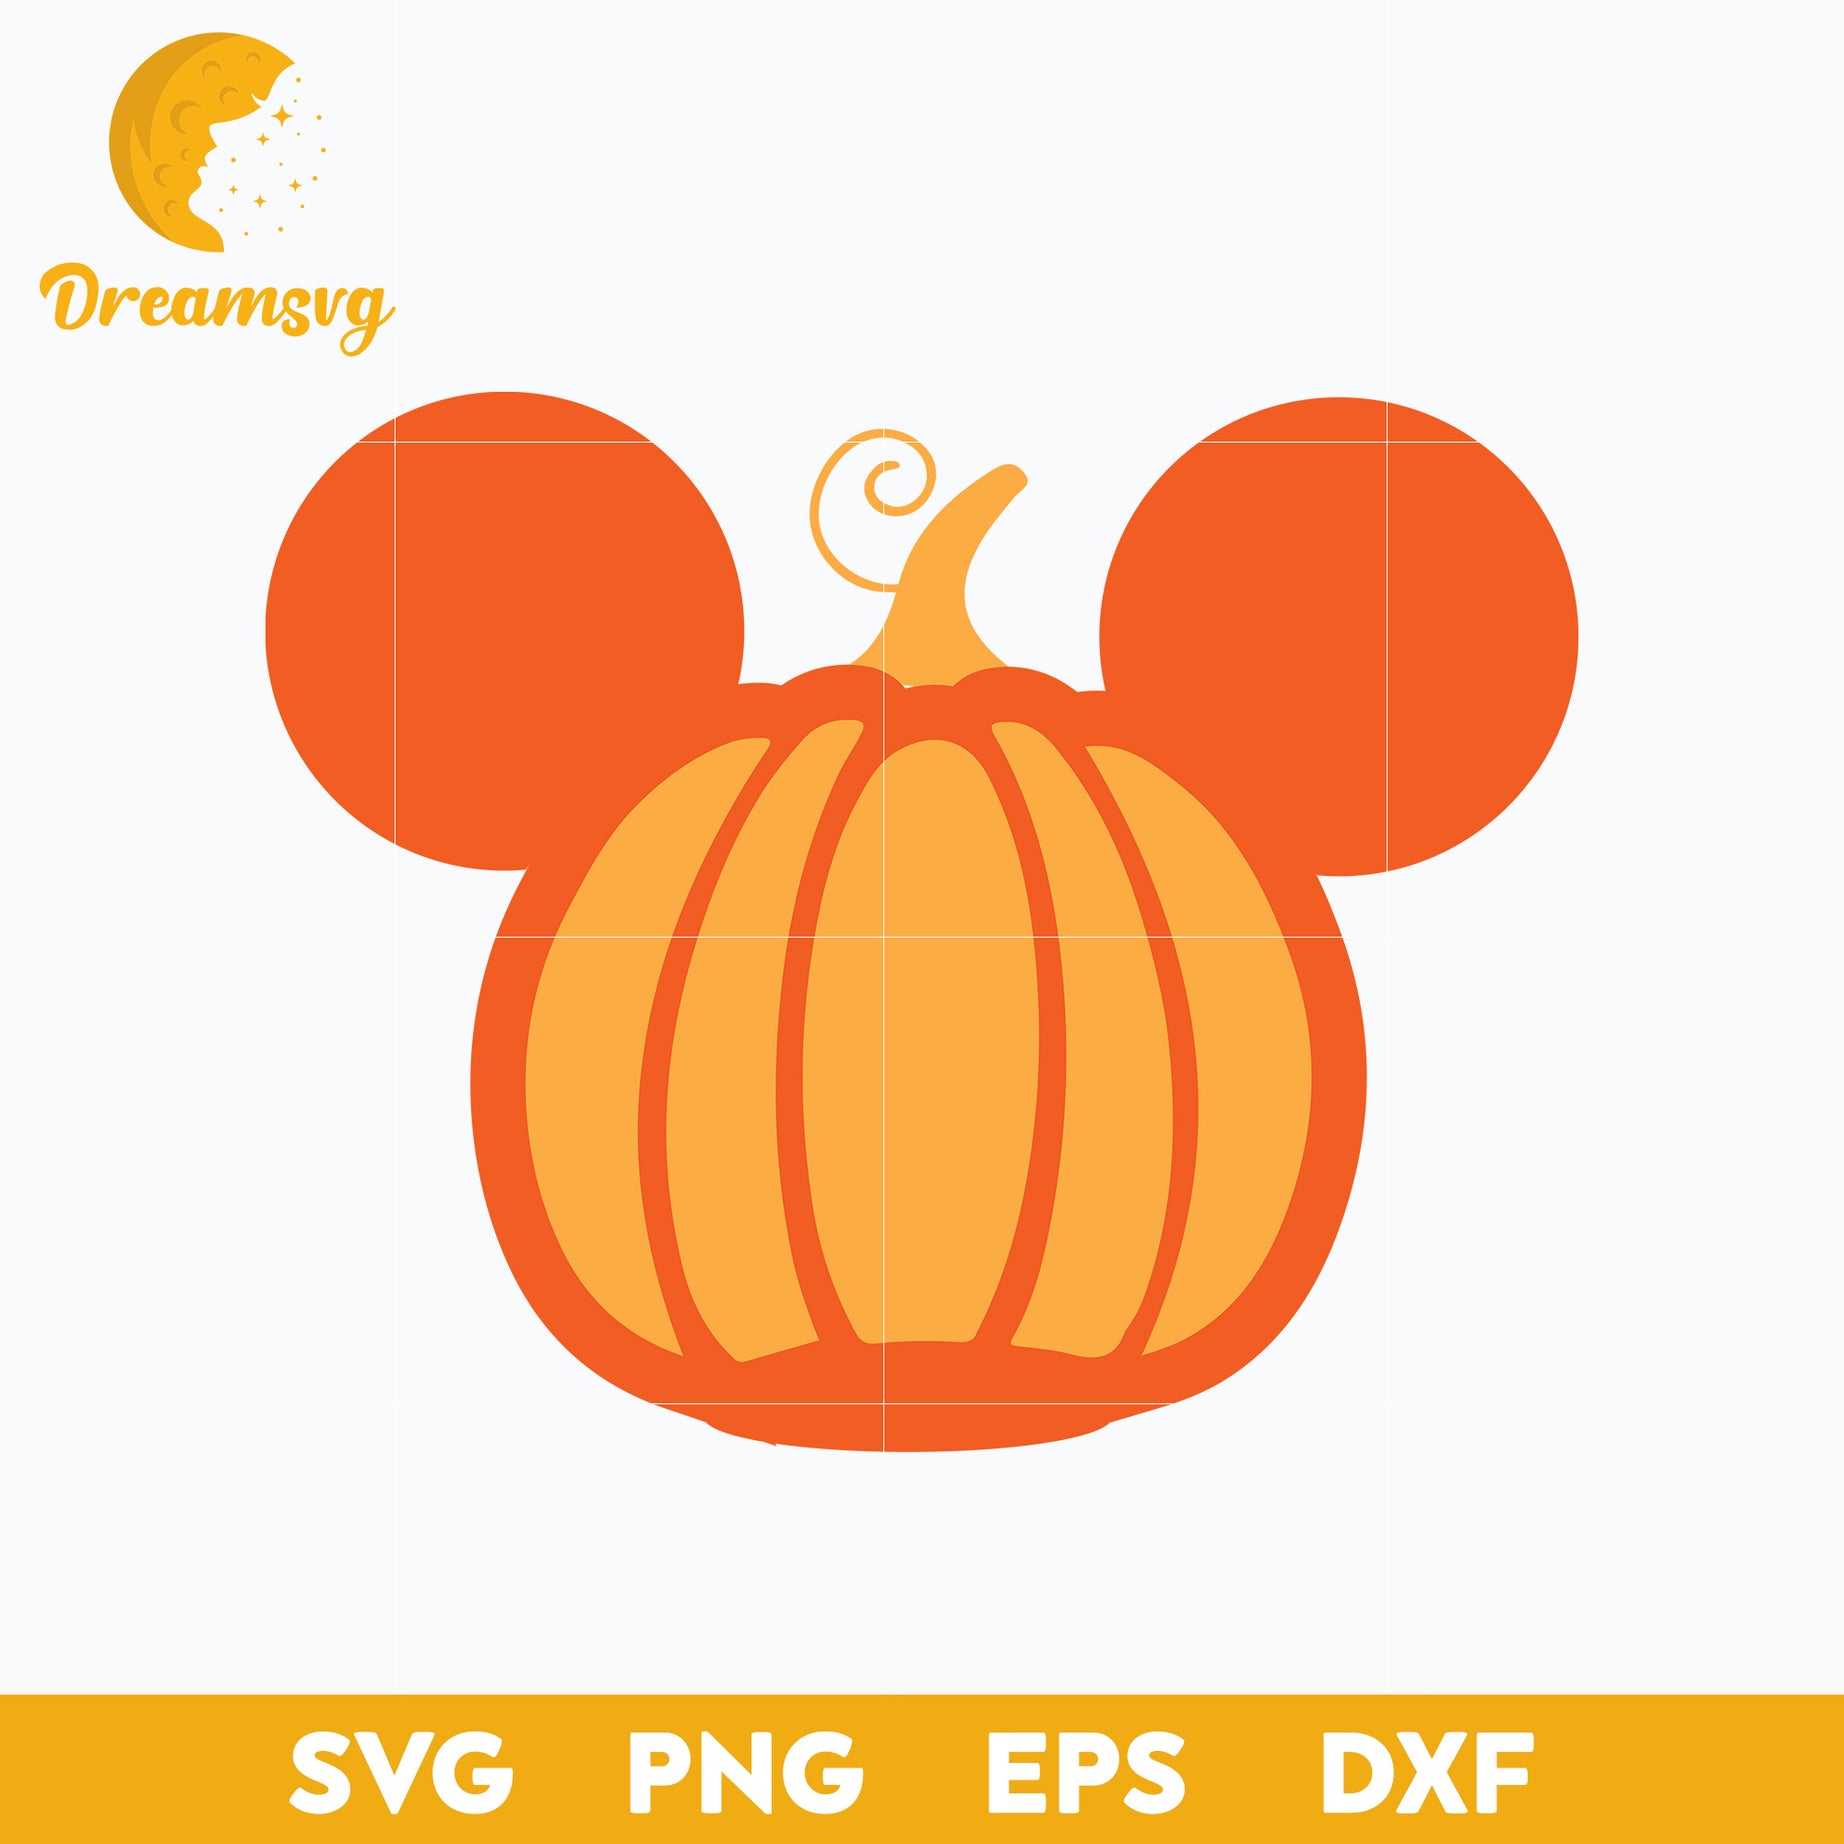 Pumpkin Mickey Halloween Svg, Mickey Halloween Svg, Mickey Svg, Halloween Svg, png, dxf, eps digital file.